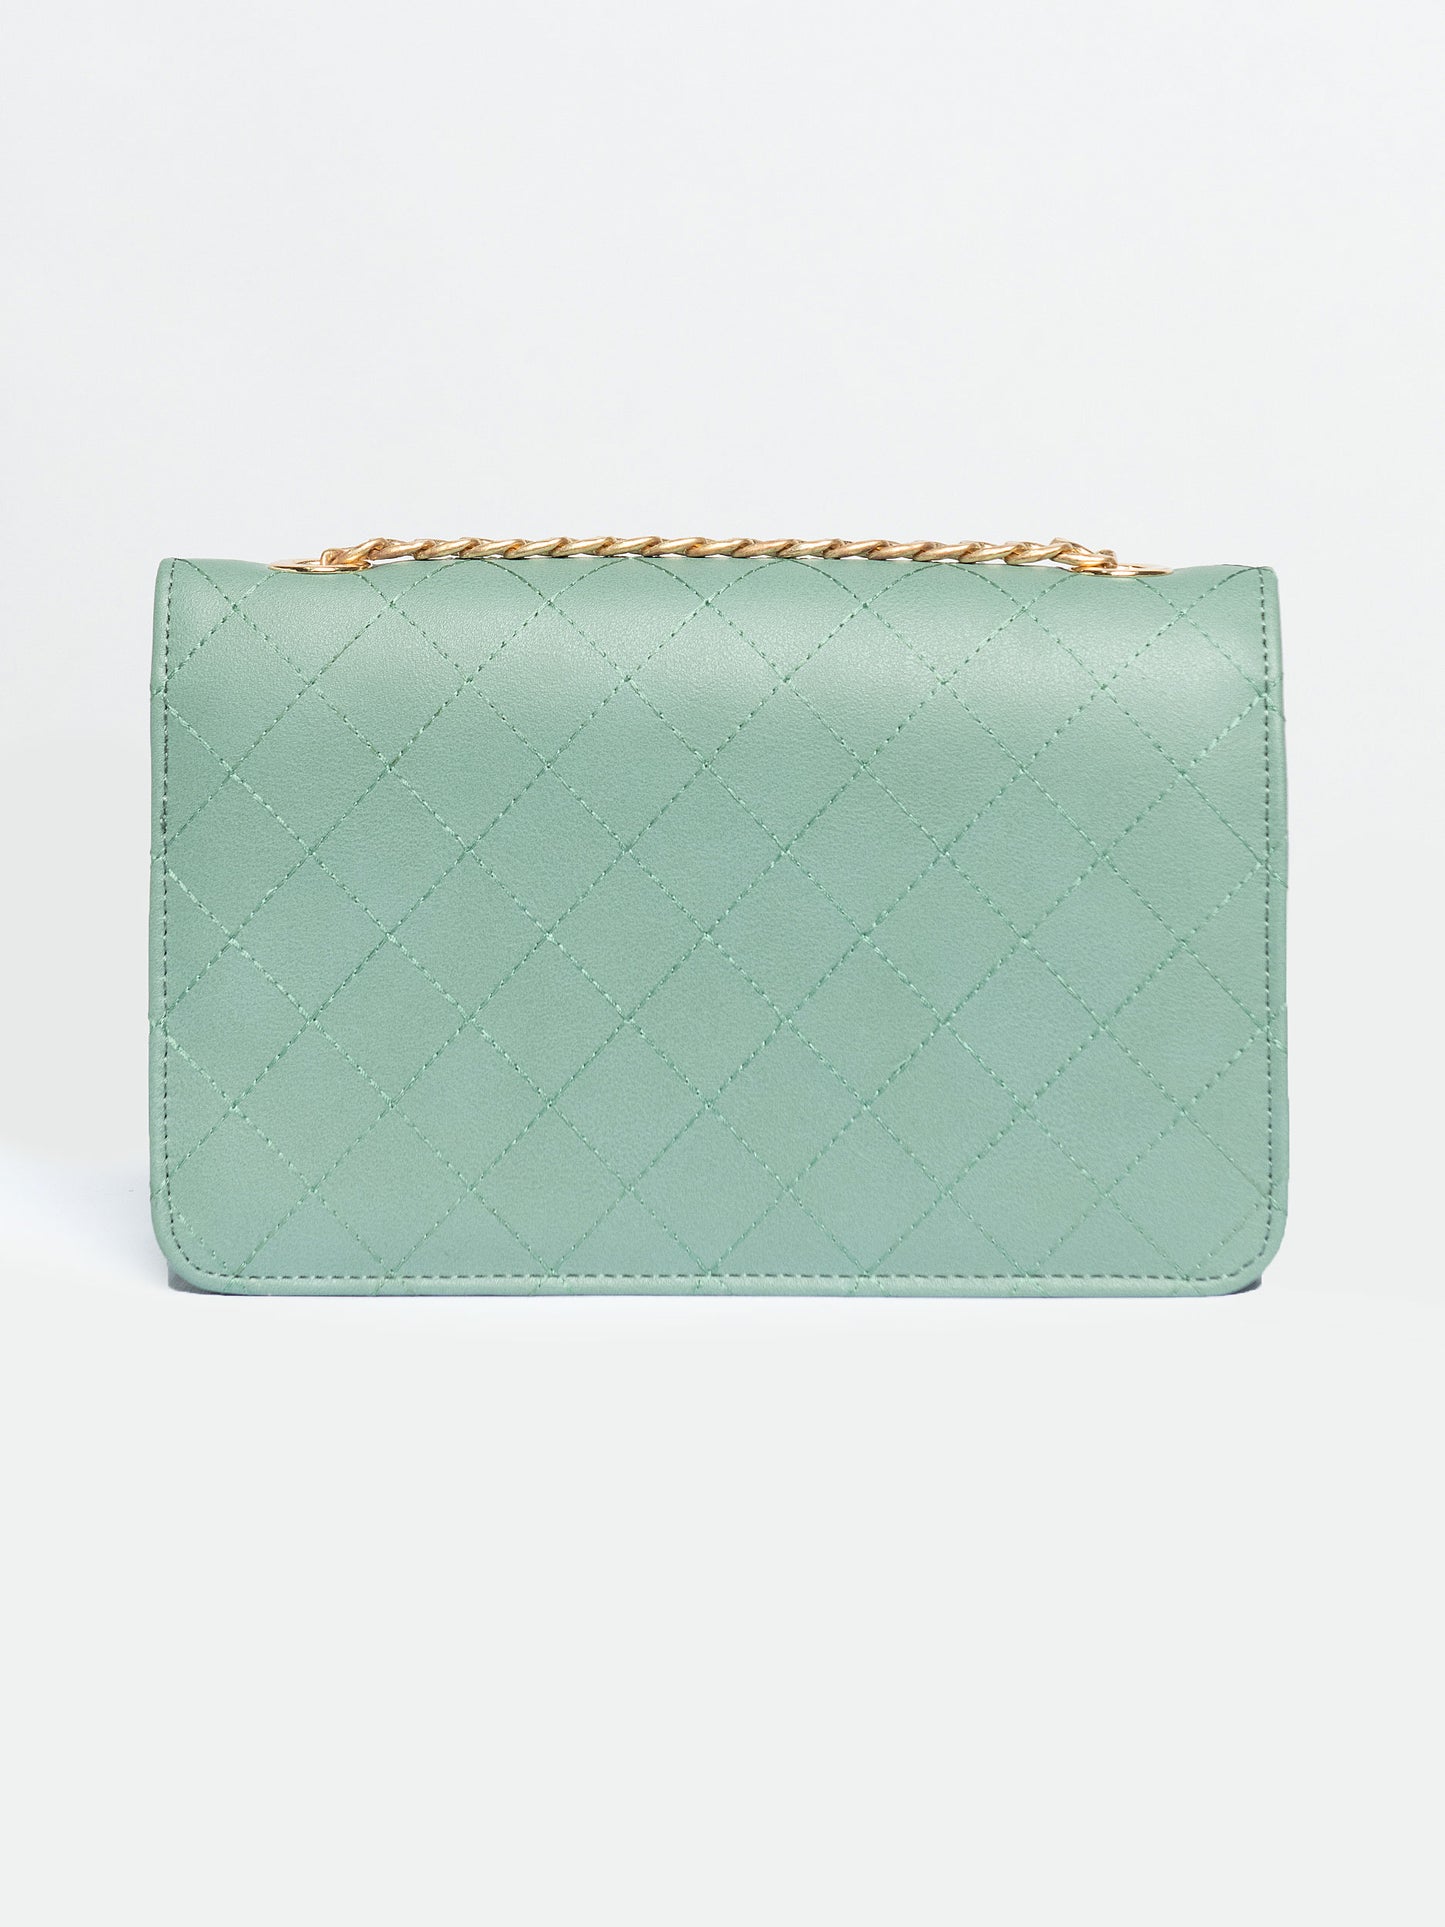 Stitched Design Handbag